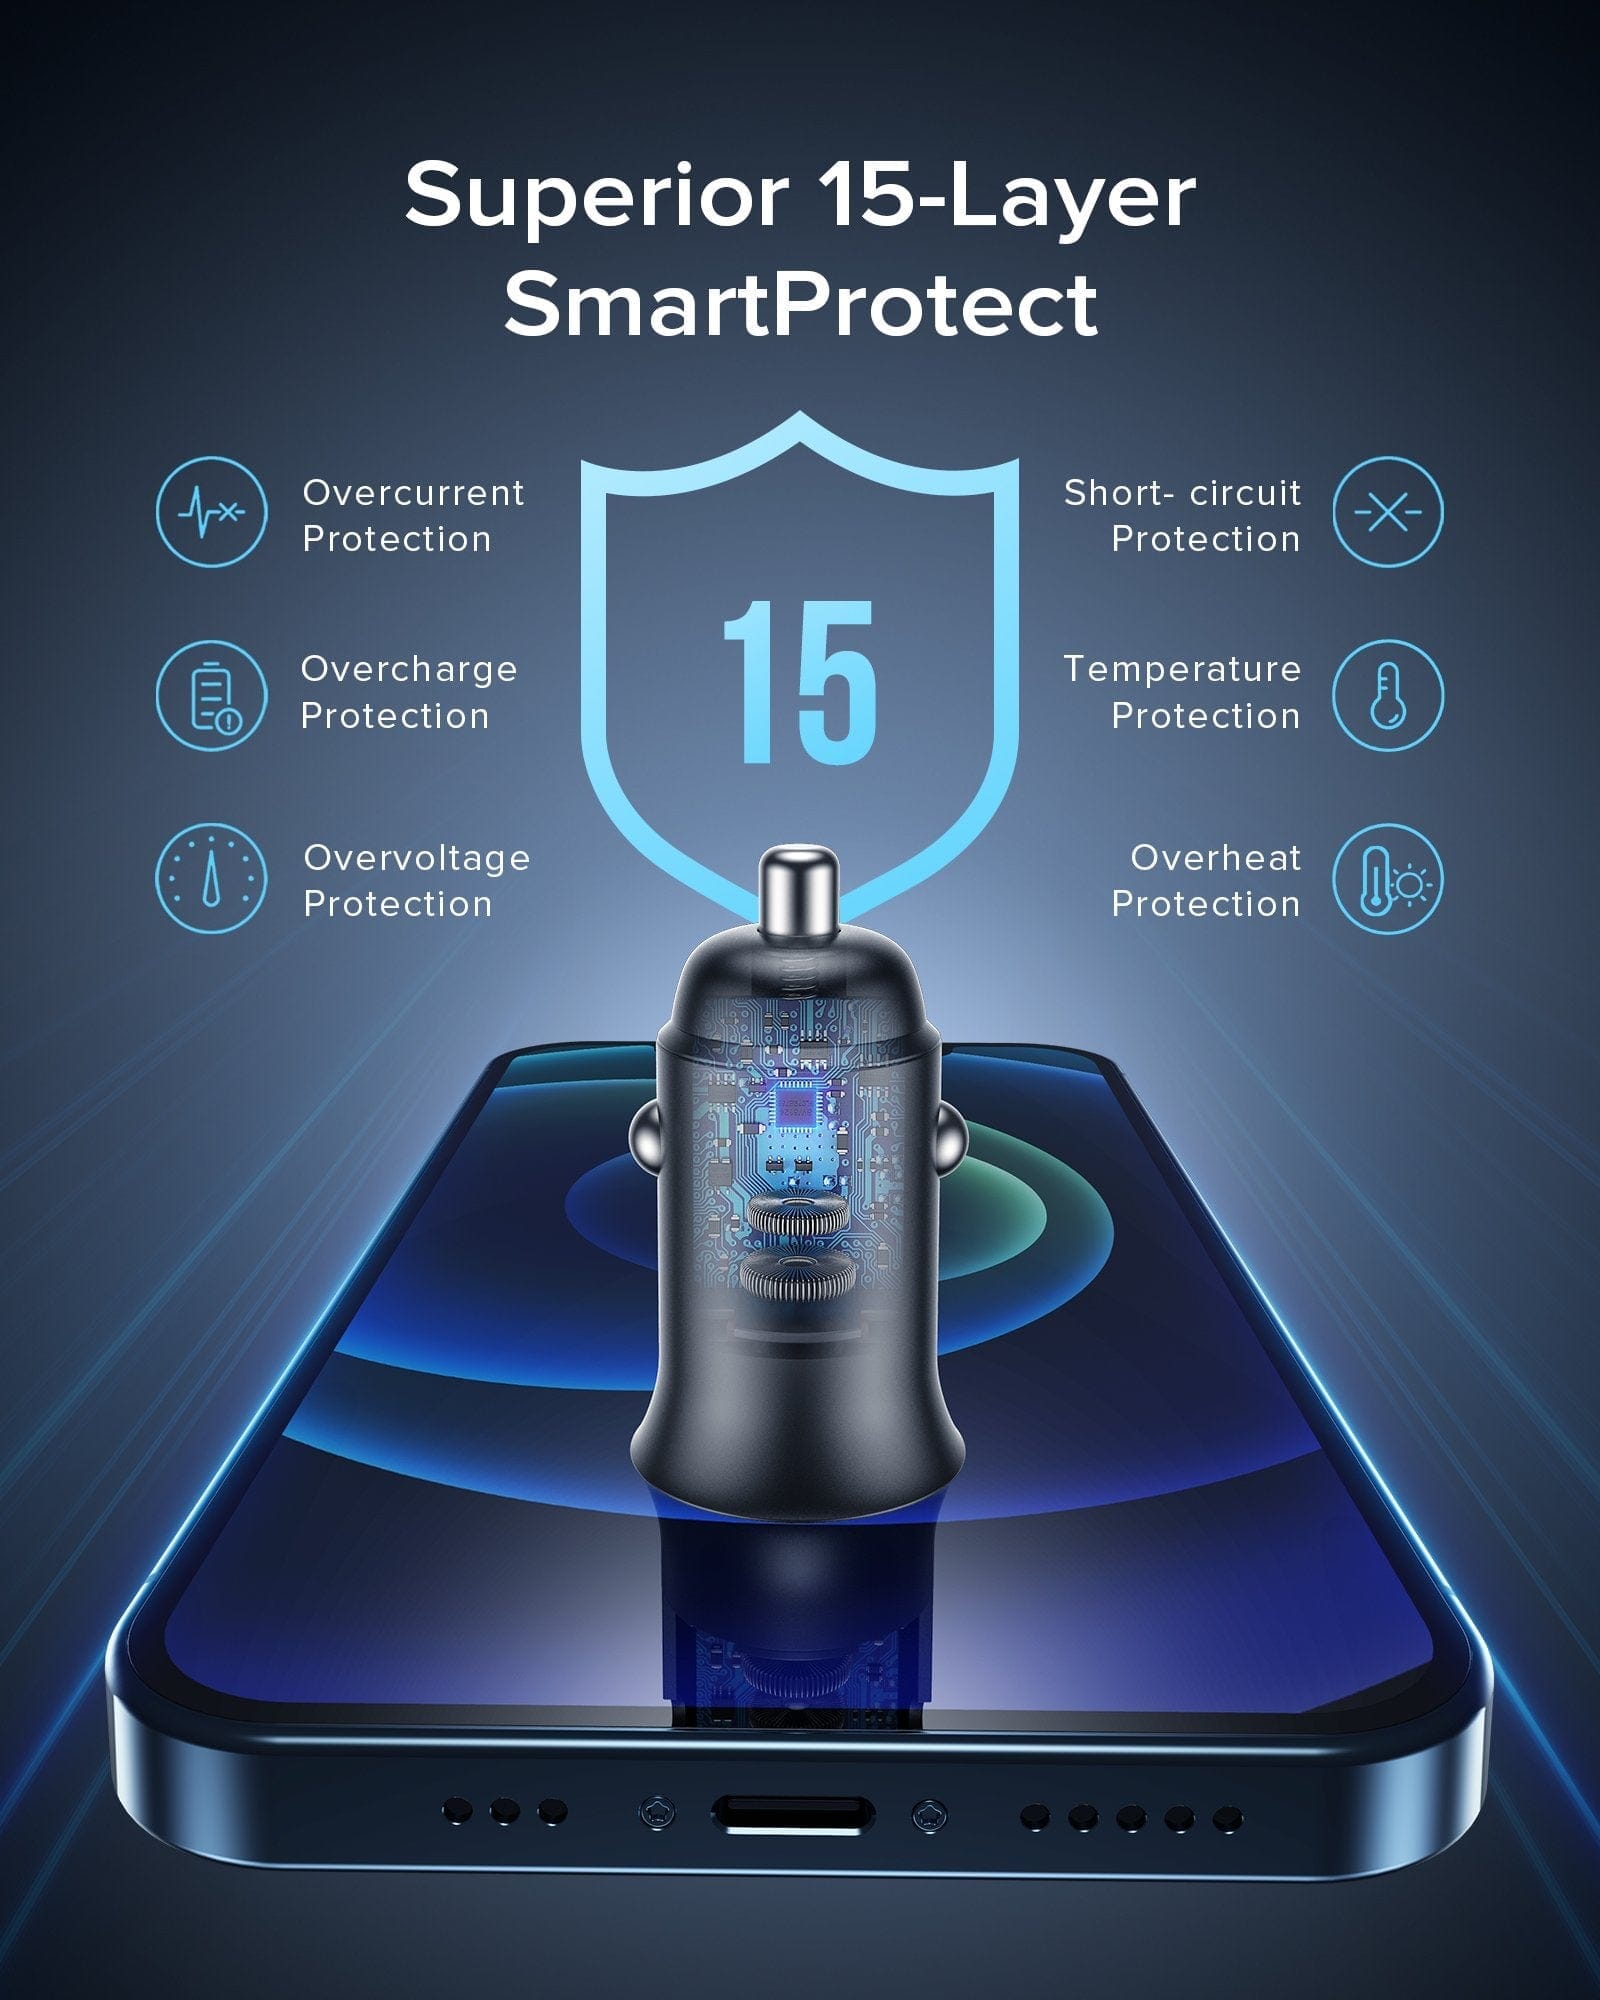 Superior 15-Layer SmartProtect